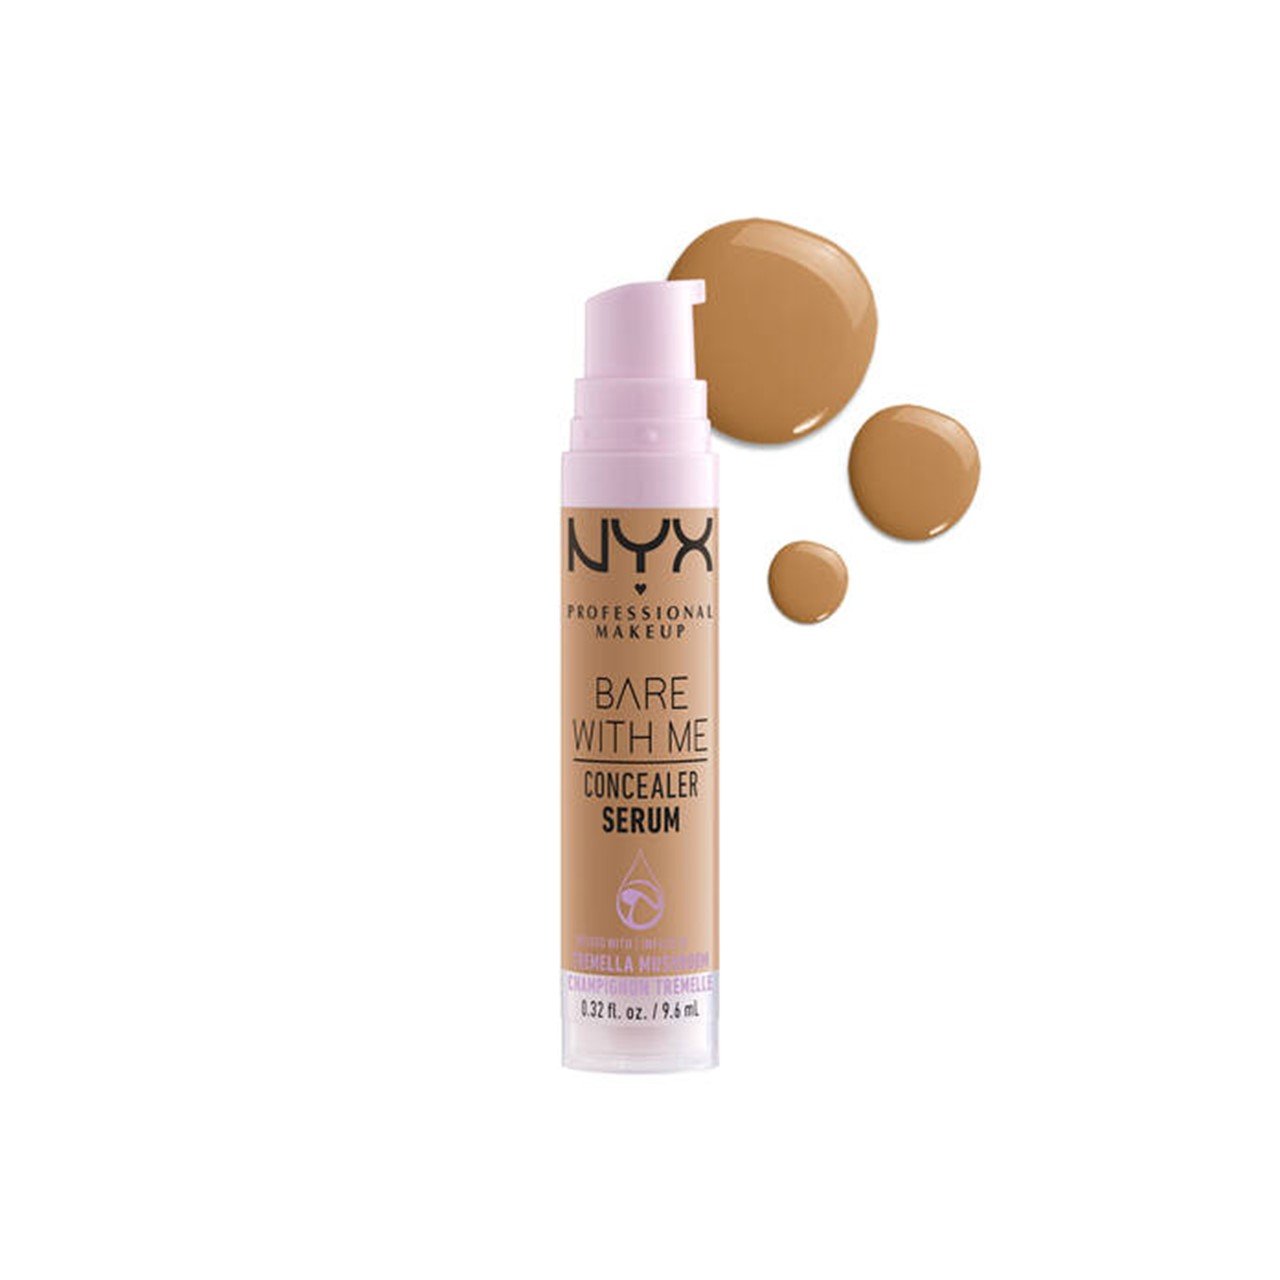 NYX Pro Makeup Bare With Me Concealer Serum 08 Sand 9.6ml (0.32 fl oz)